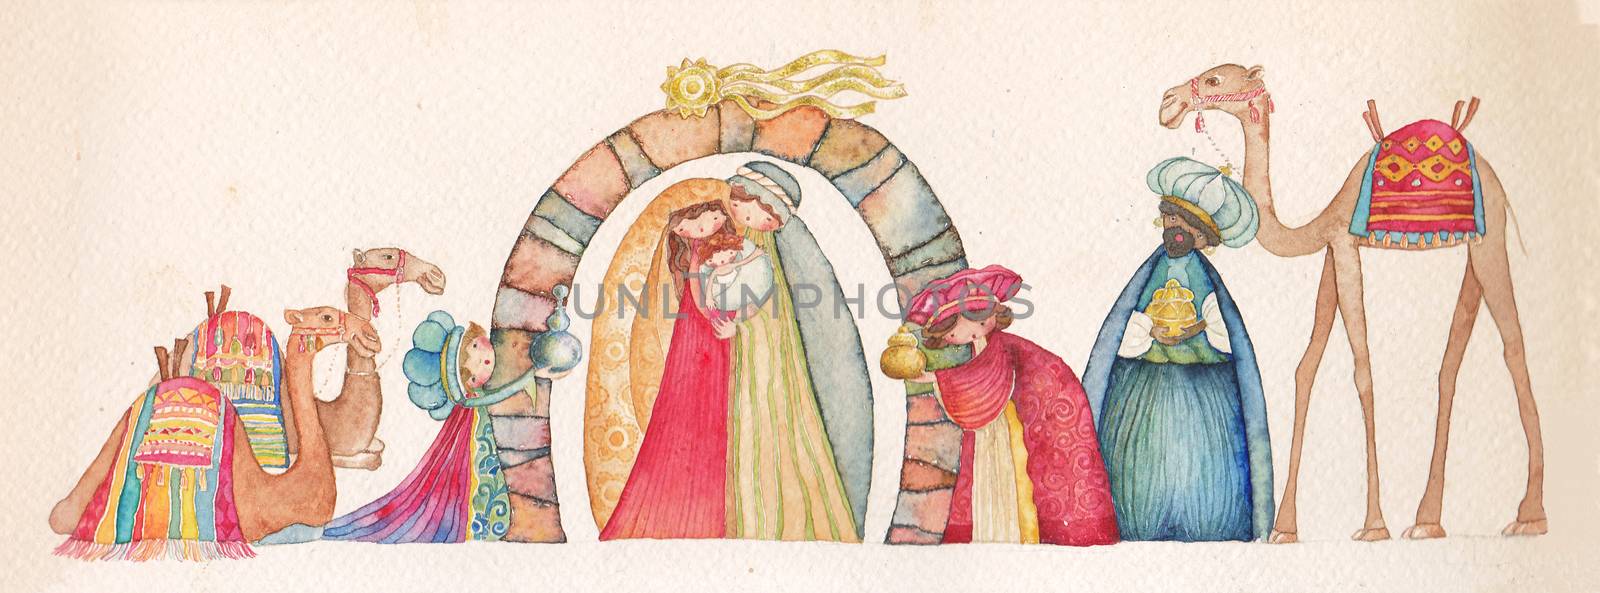 Christmas nativity scene: Jesus Christ , Joseph, Mary by vimasi